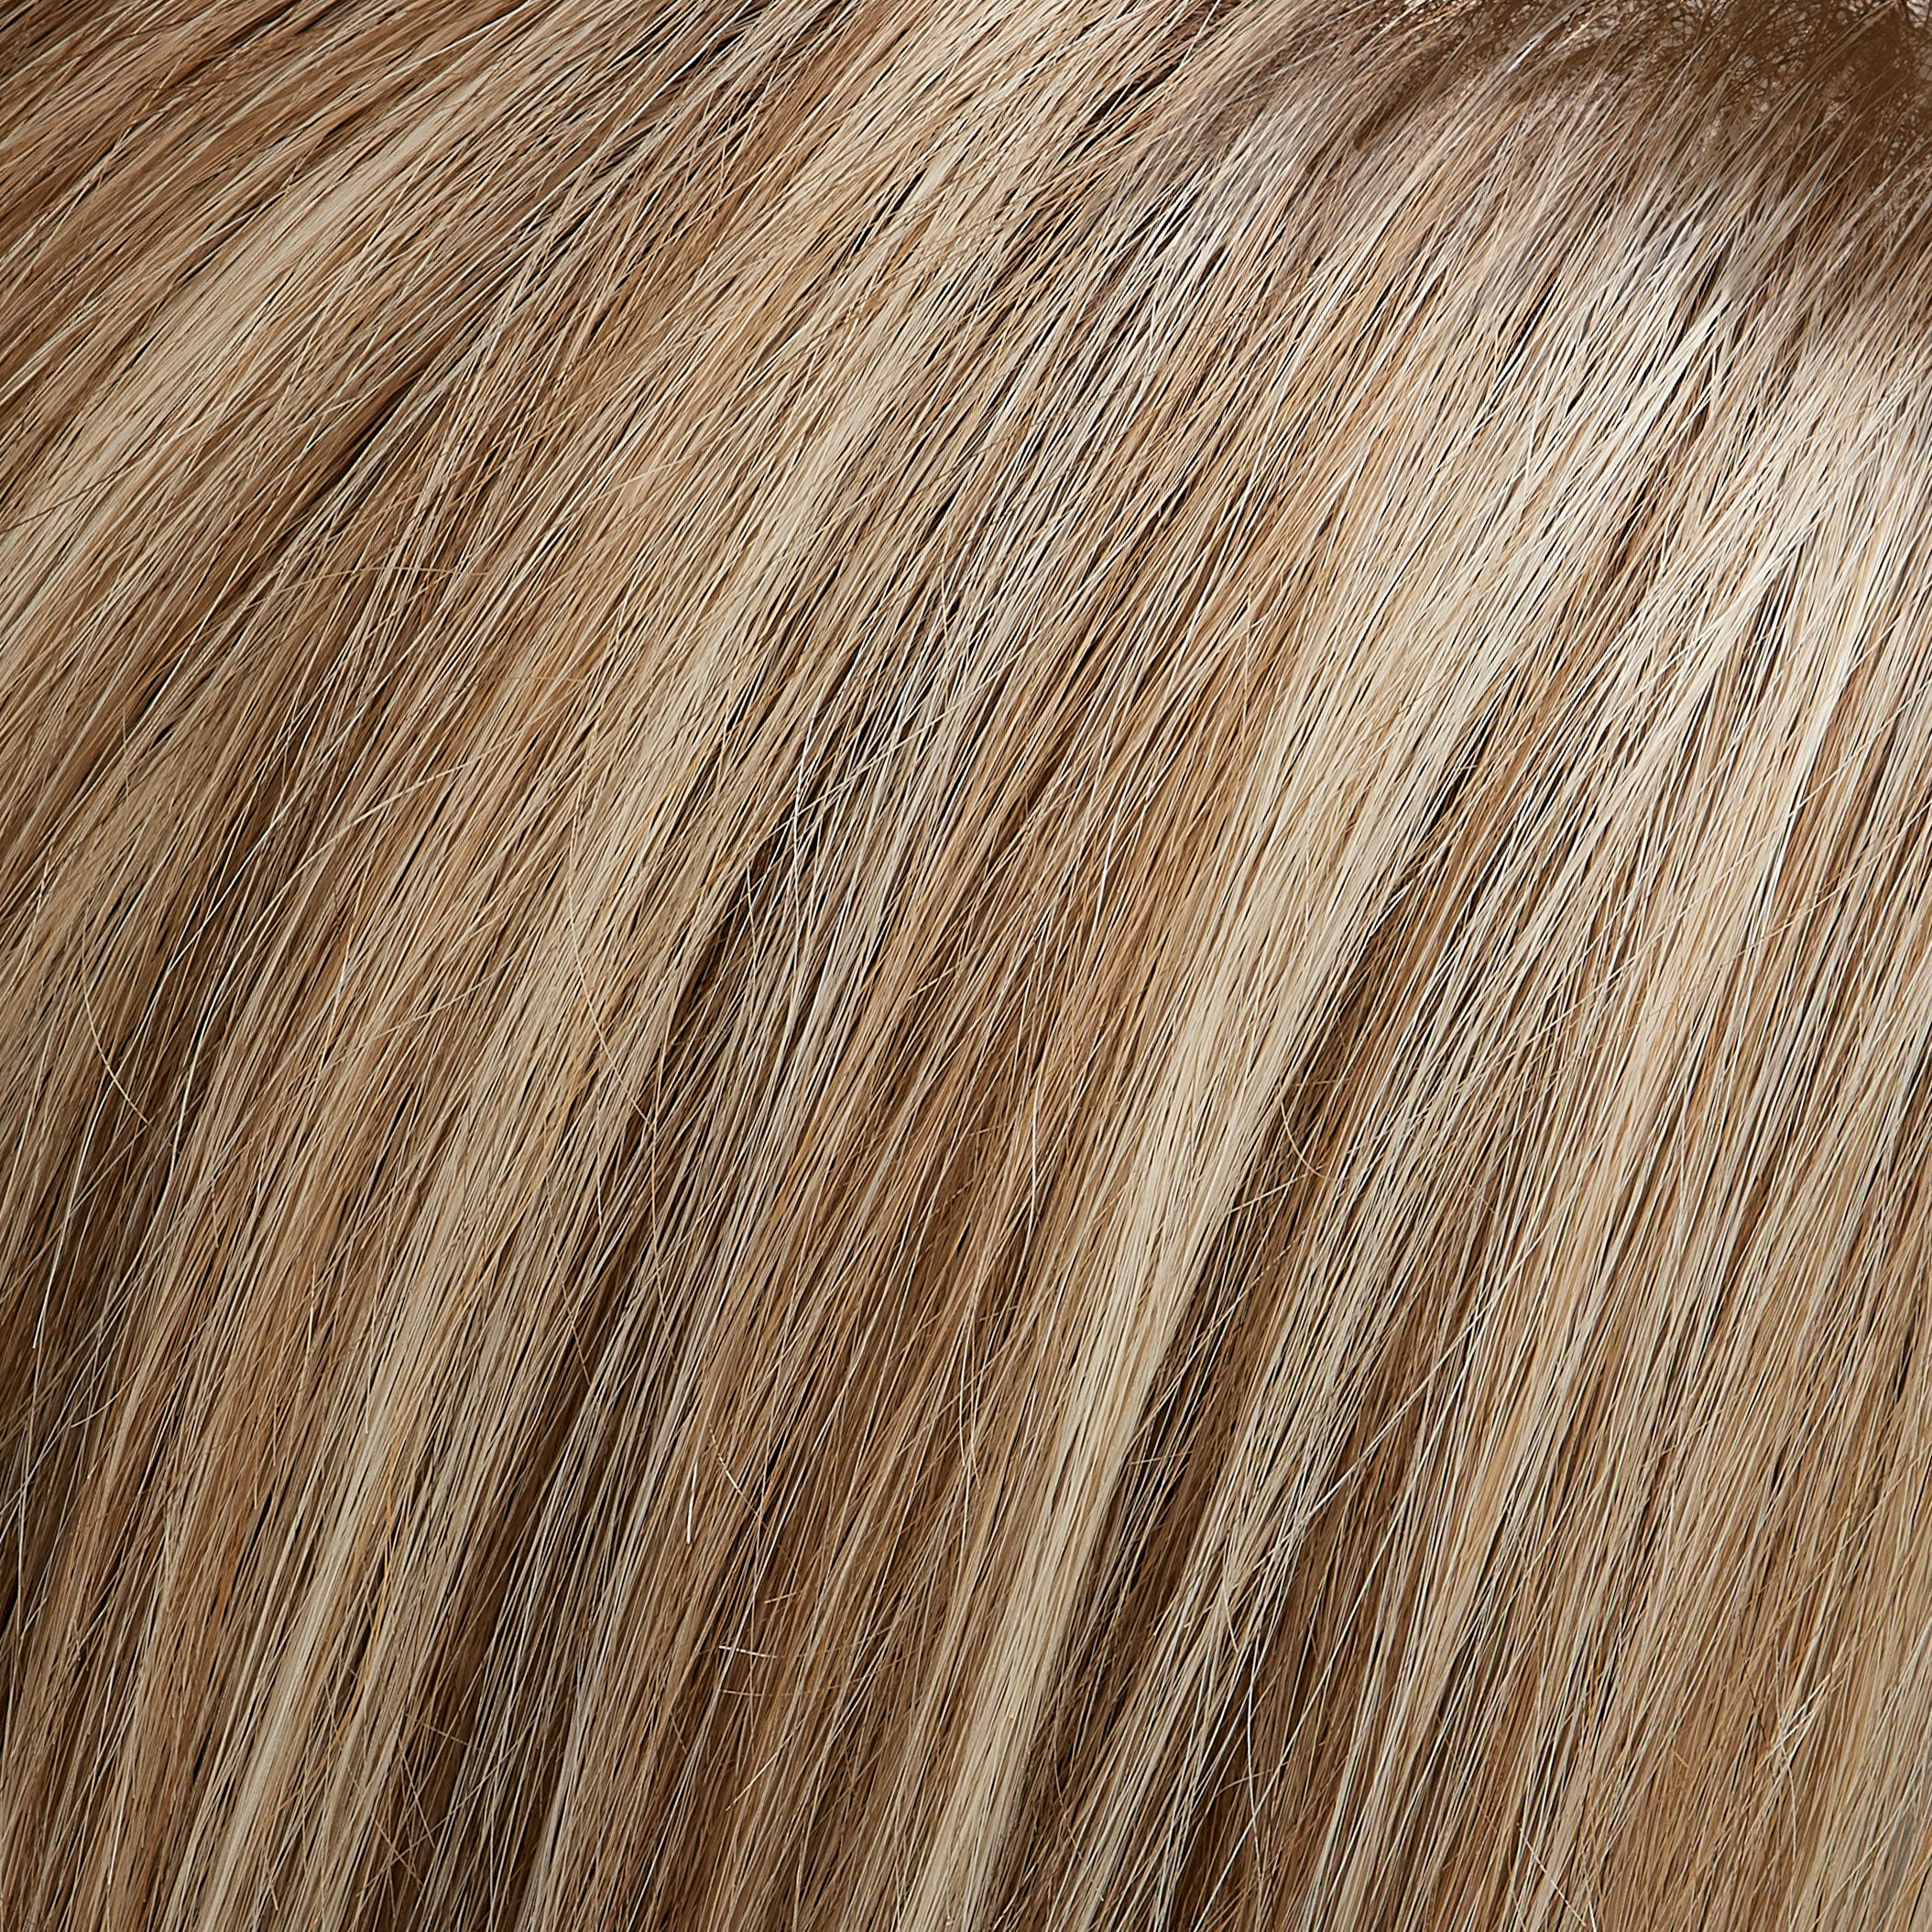 easiPart 18” human hair topper - Jon Renau